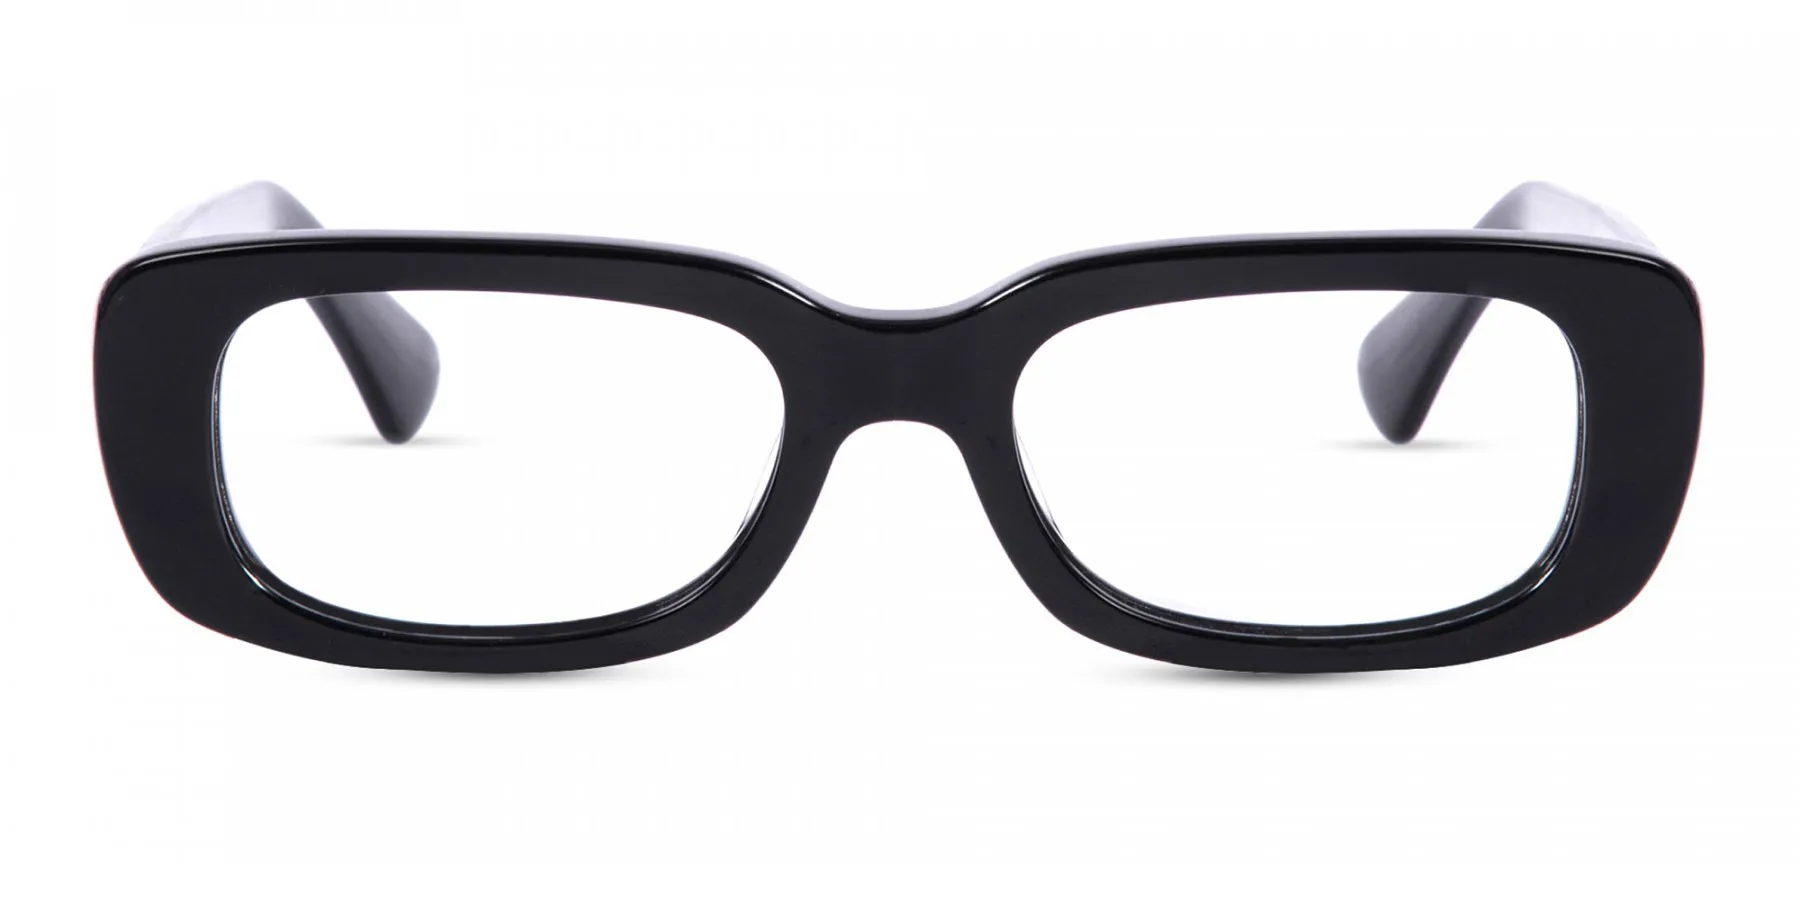 Small Rectangular Glasses - 2